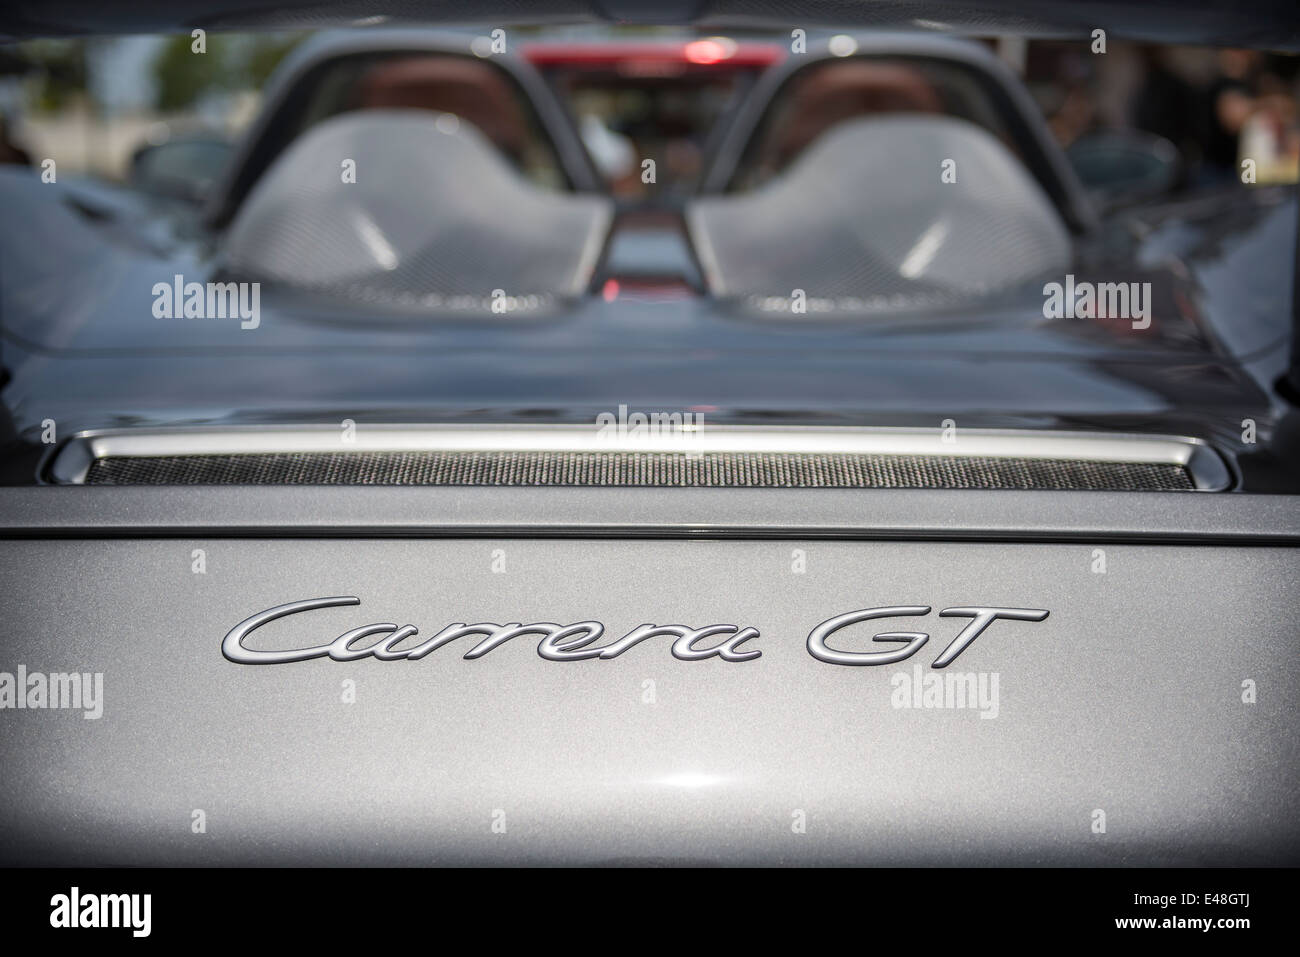 L'esotico e bella Porsche Carrera GT supercar. Foto Stock